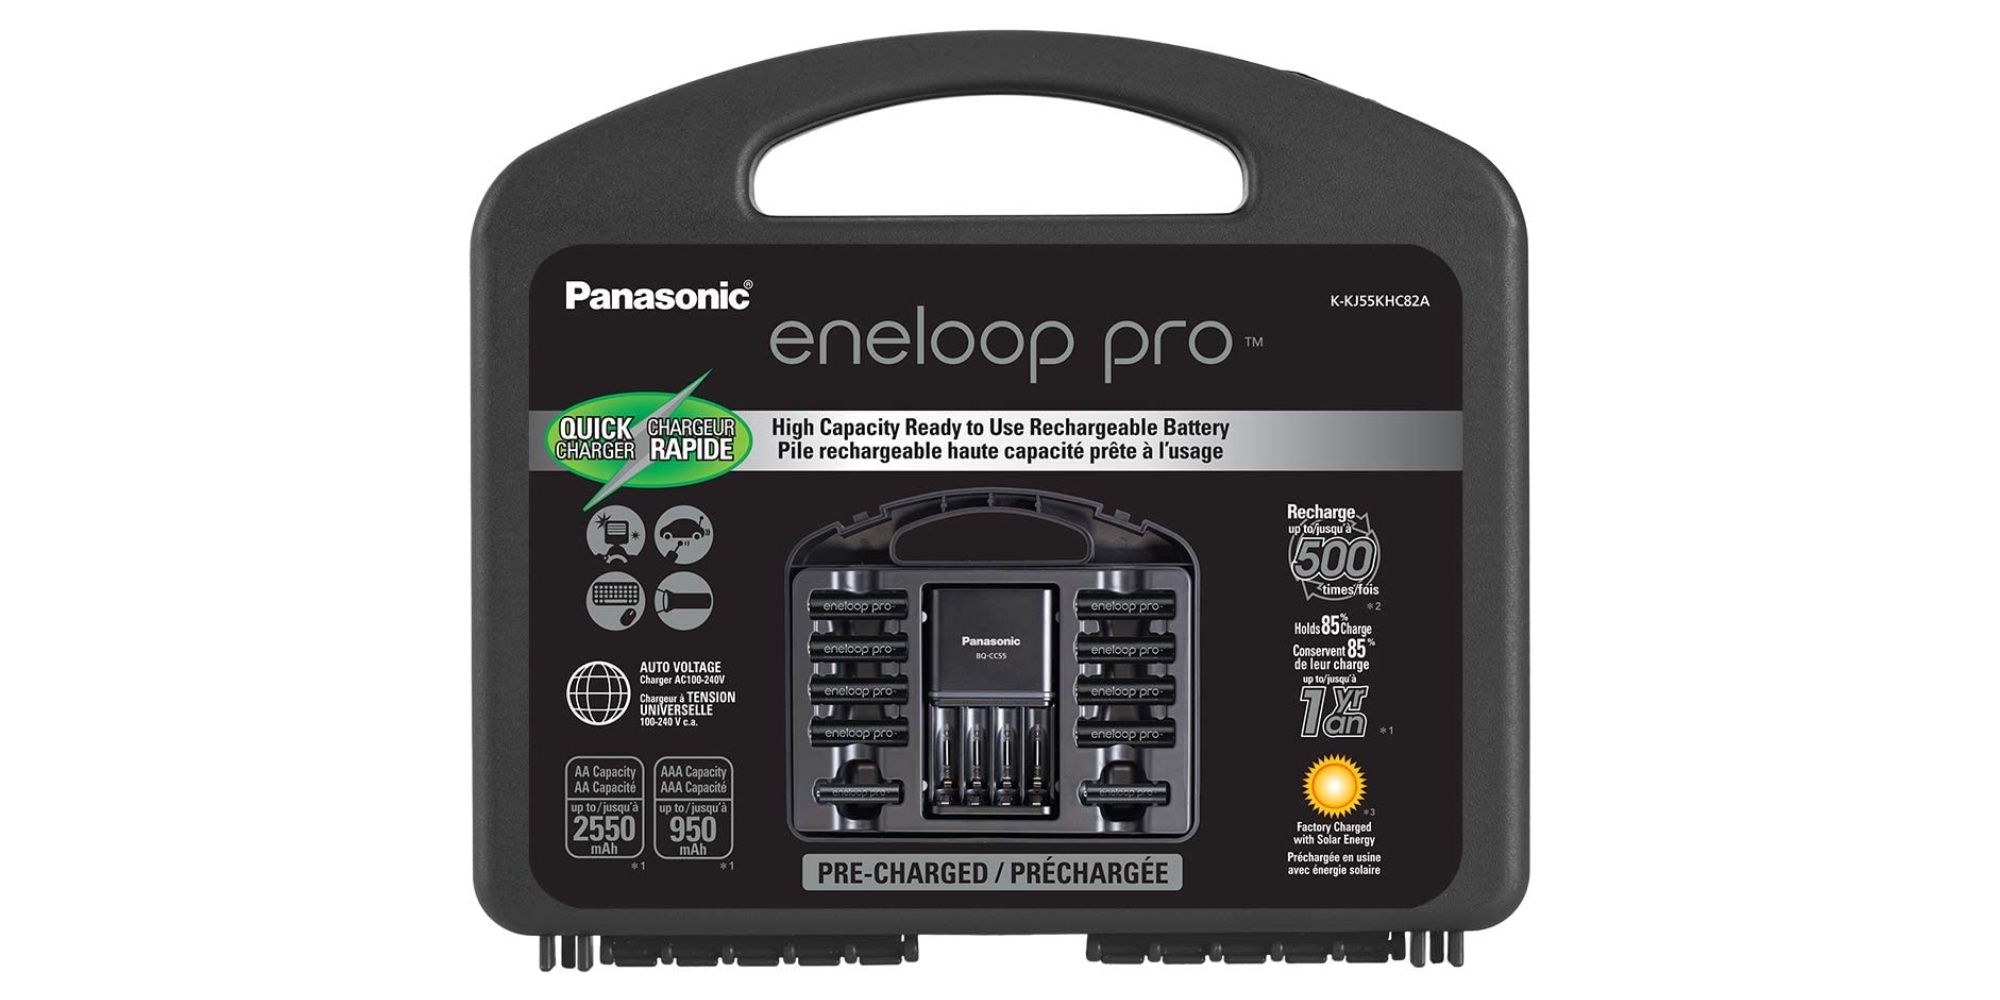 Panasonic eneloop pro rechargeable battery package on sale